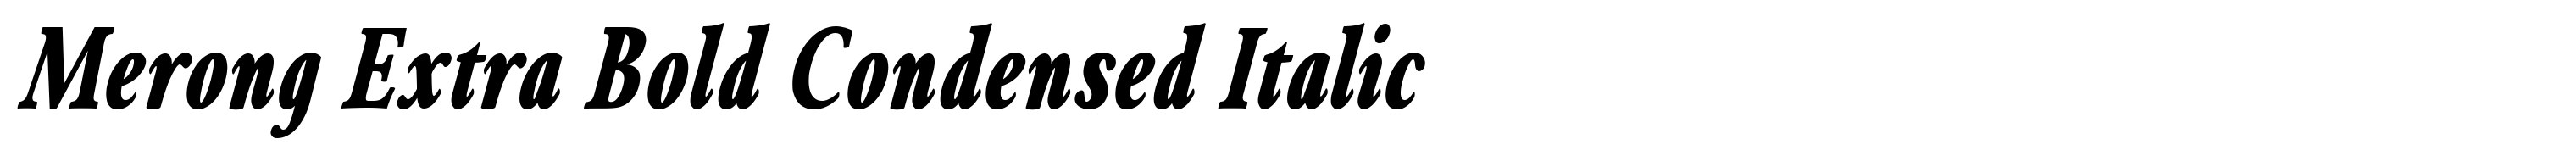 Merong Extra Bold Condensed Italic